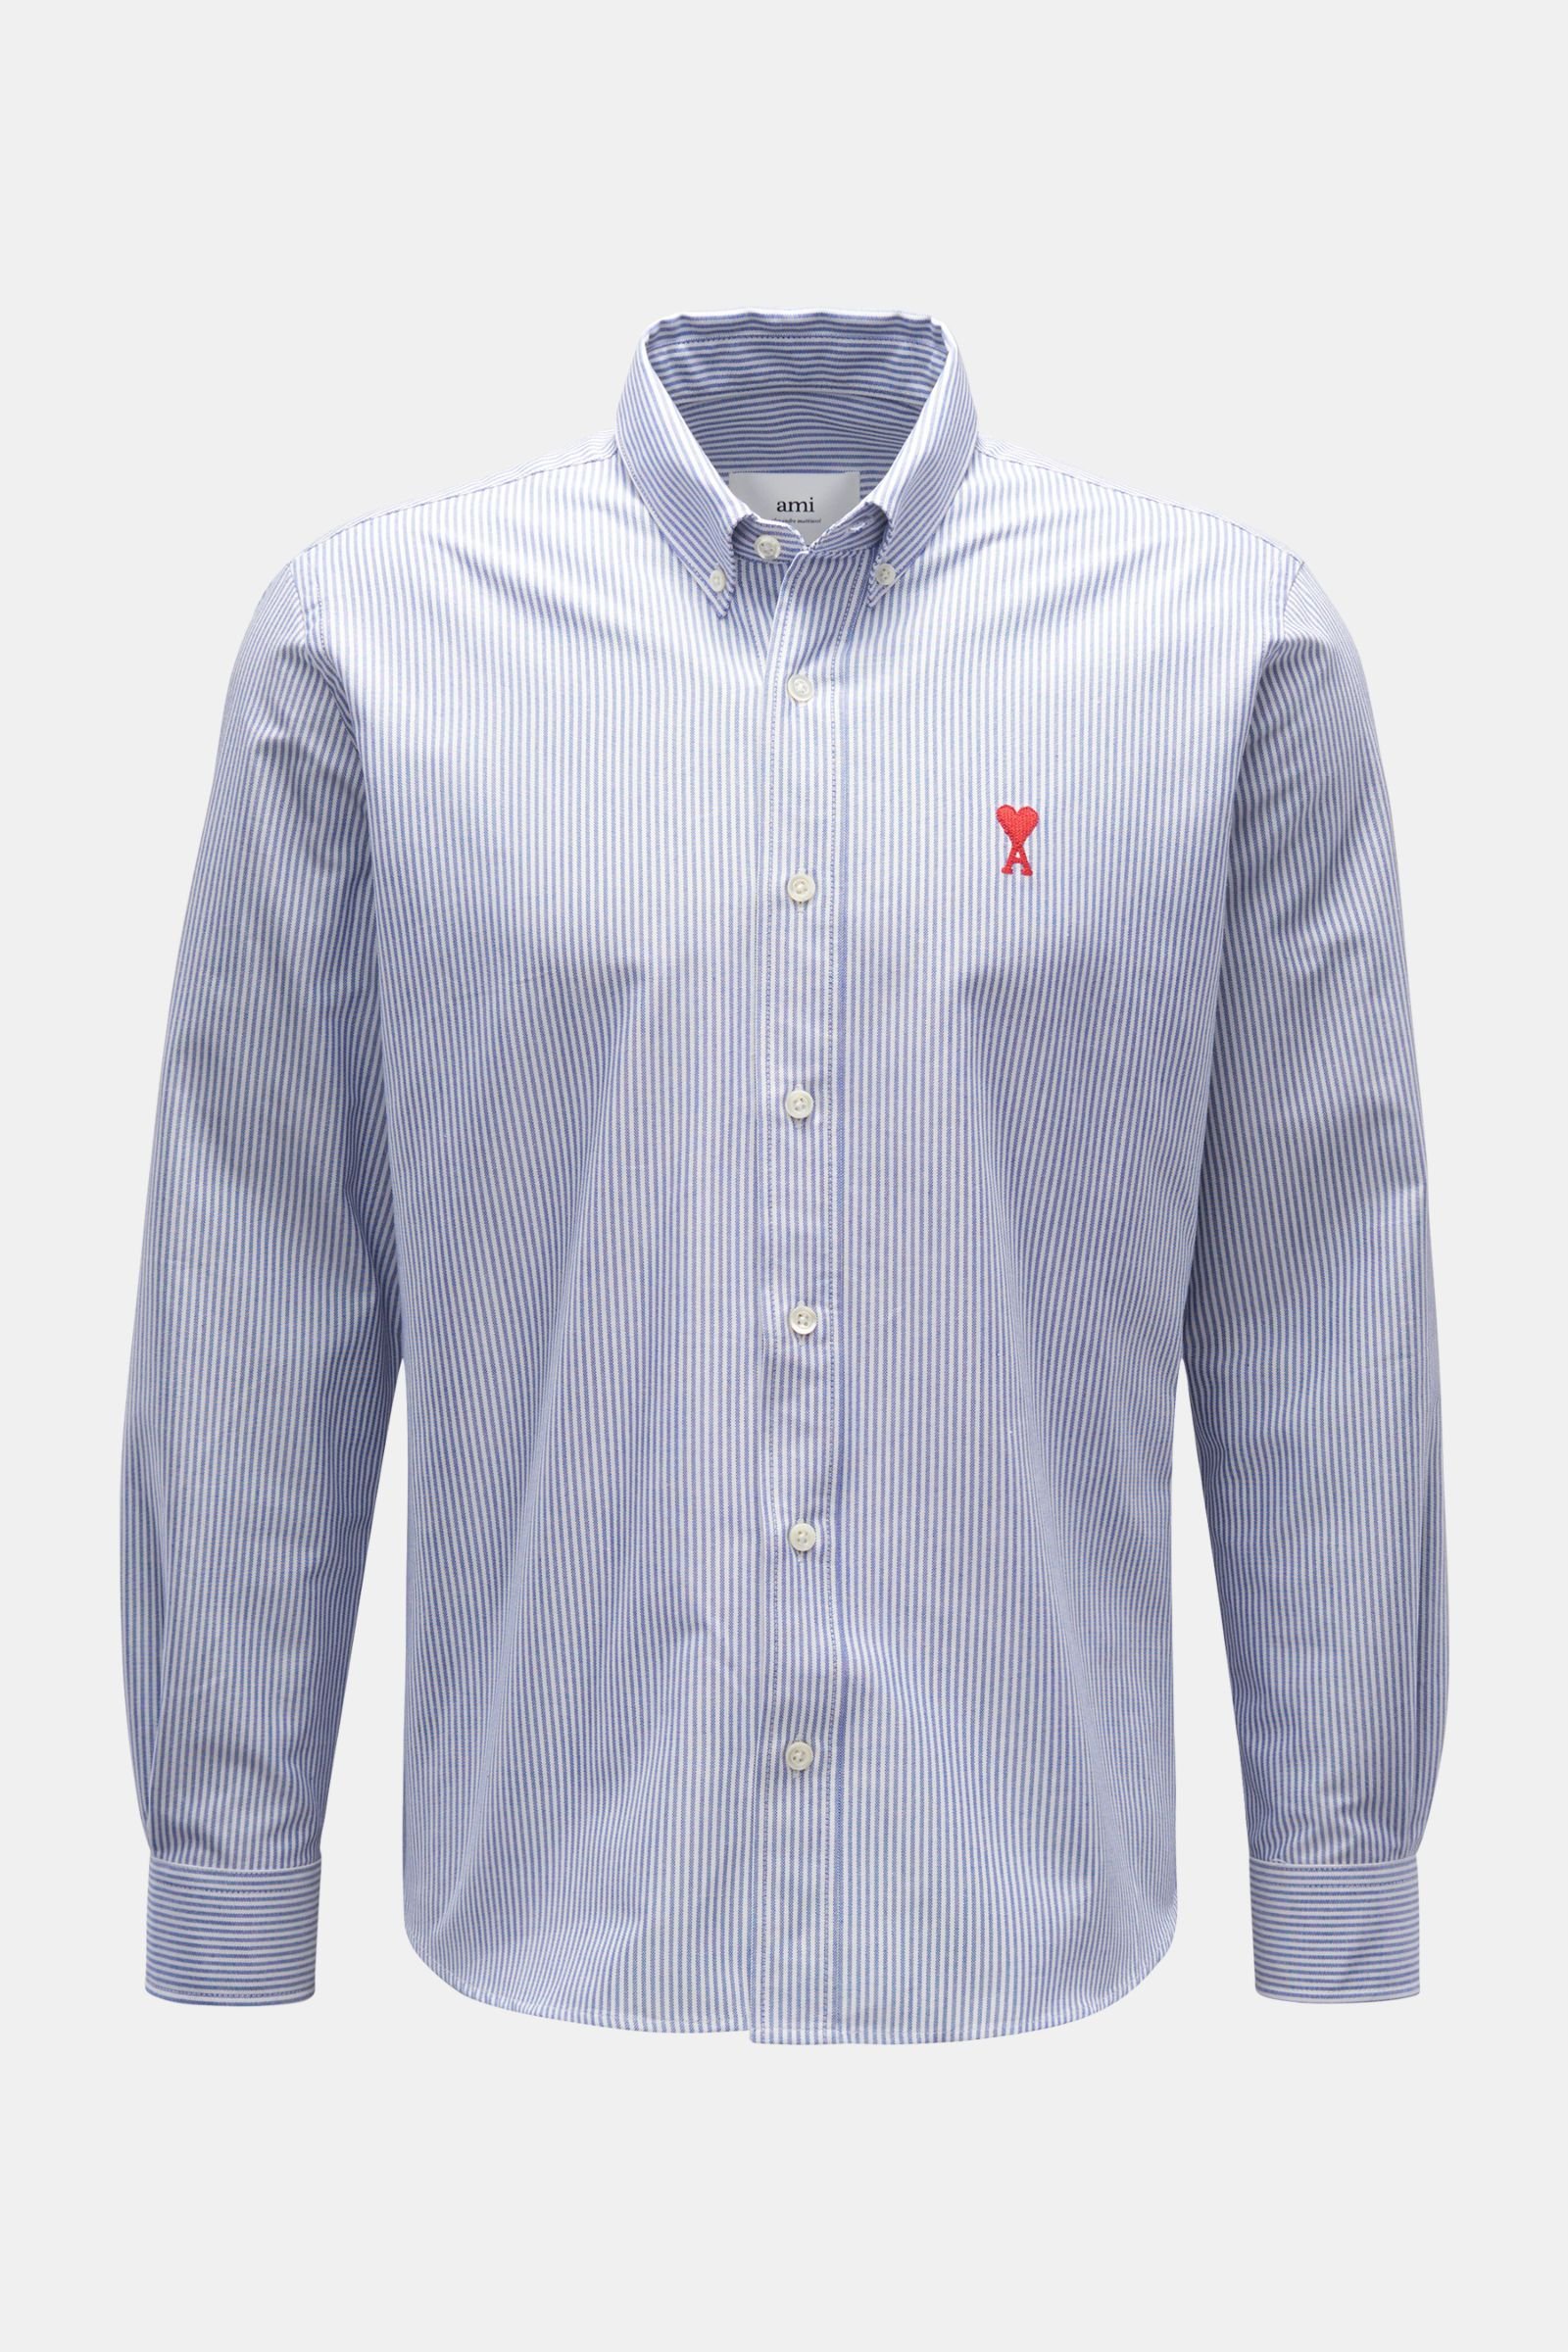 Oxford shirt button-down collar blue/white striped